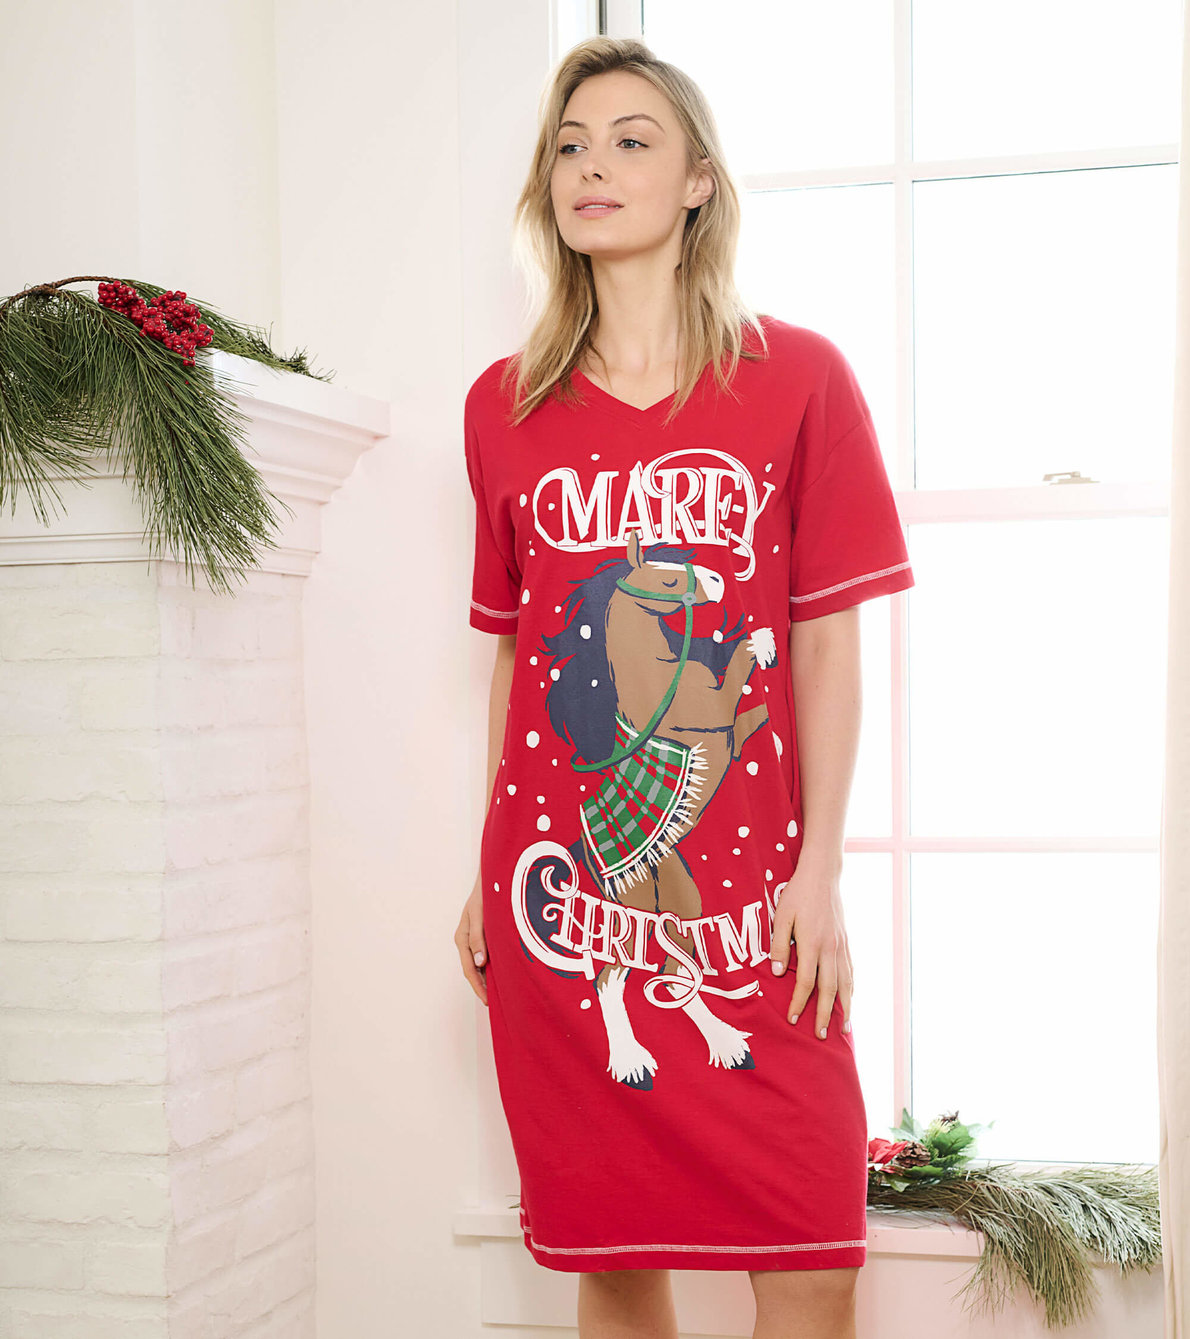 View larger image of Marey Christmas Women's Sleepshirt